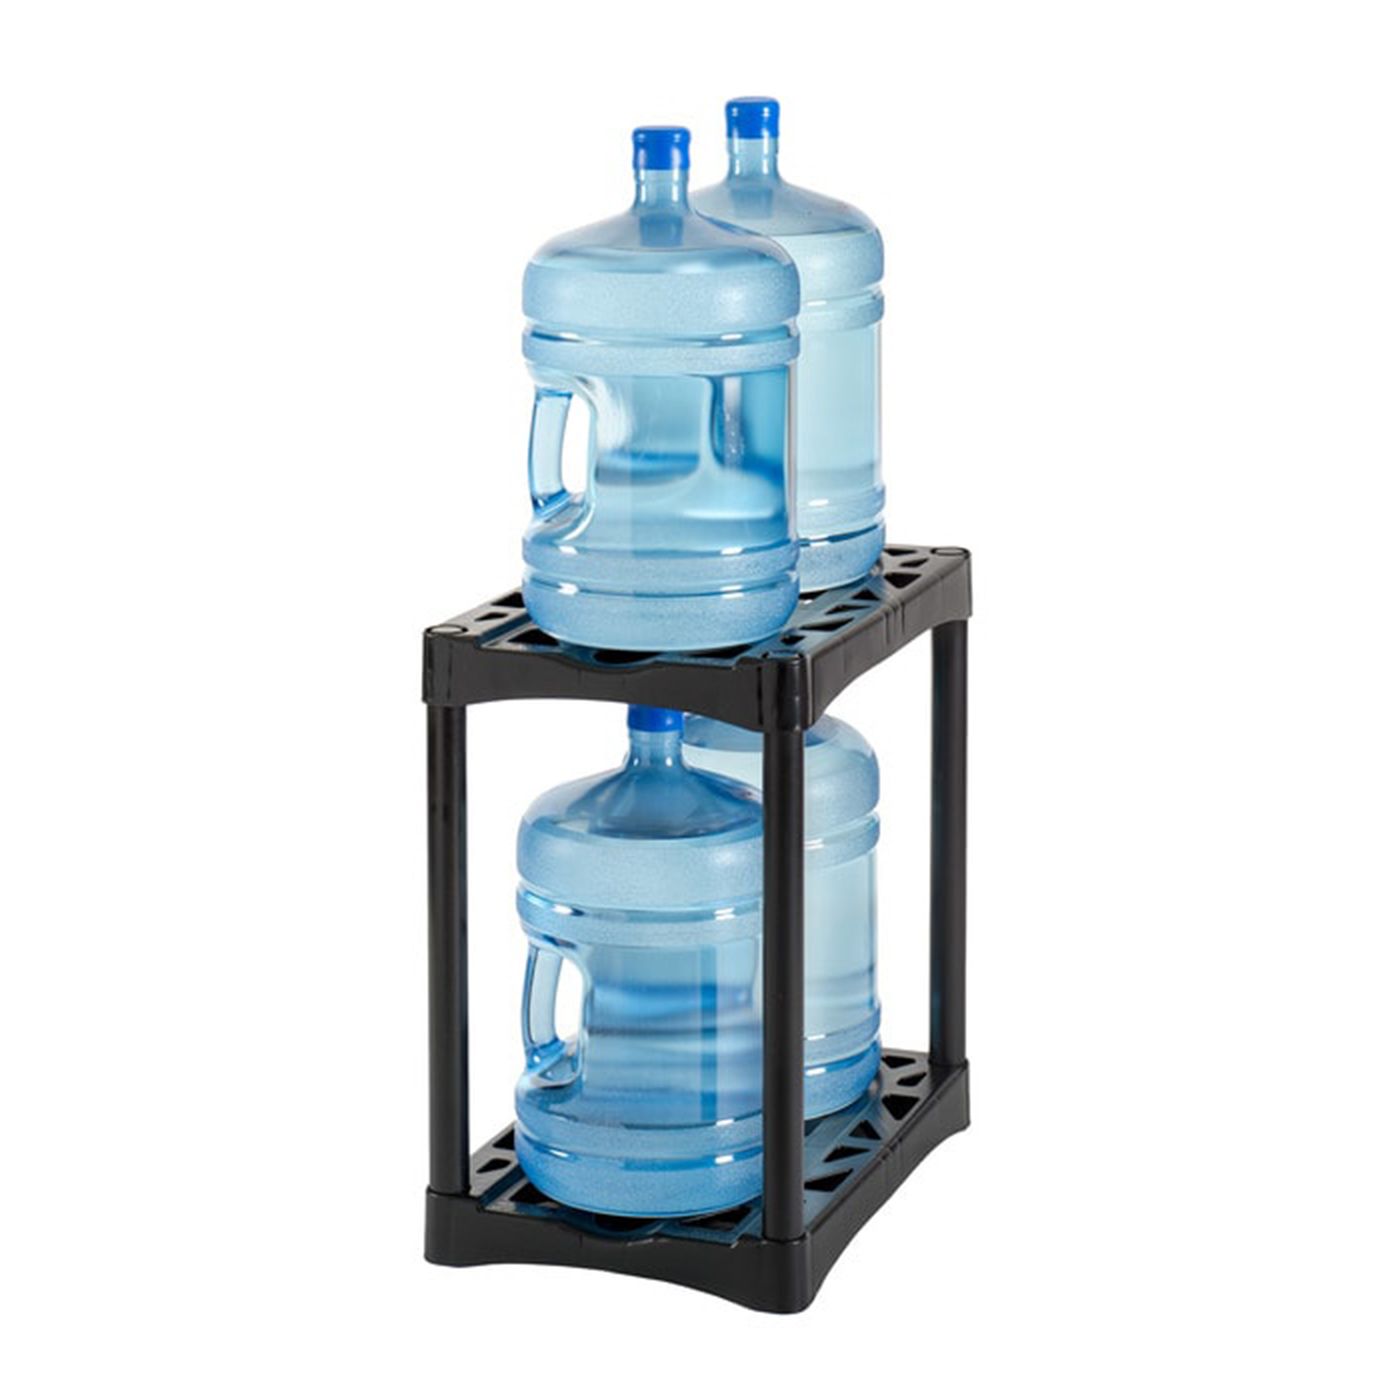 https://distillata.com/wp-content/uploads/2019/09/Water-Bottle-Rack.jpg